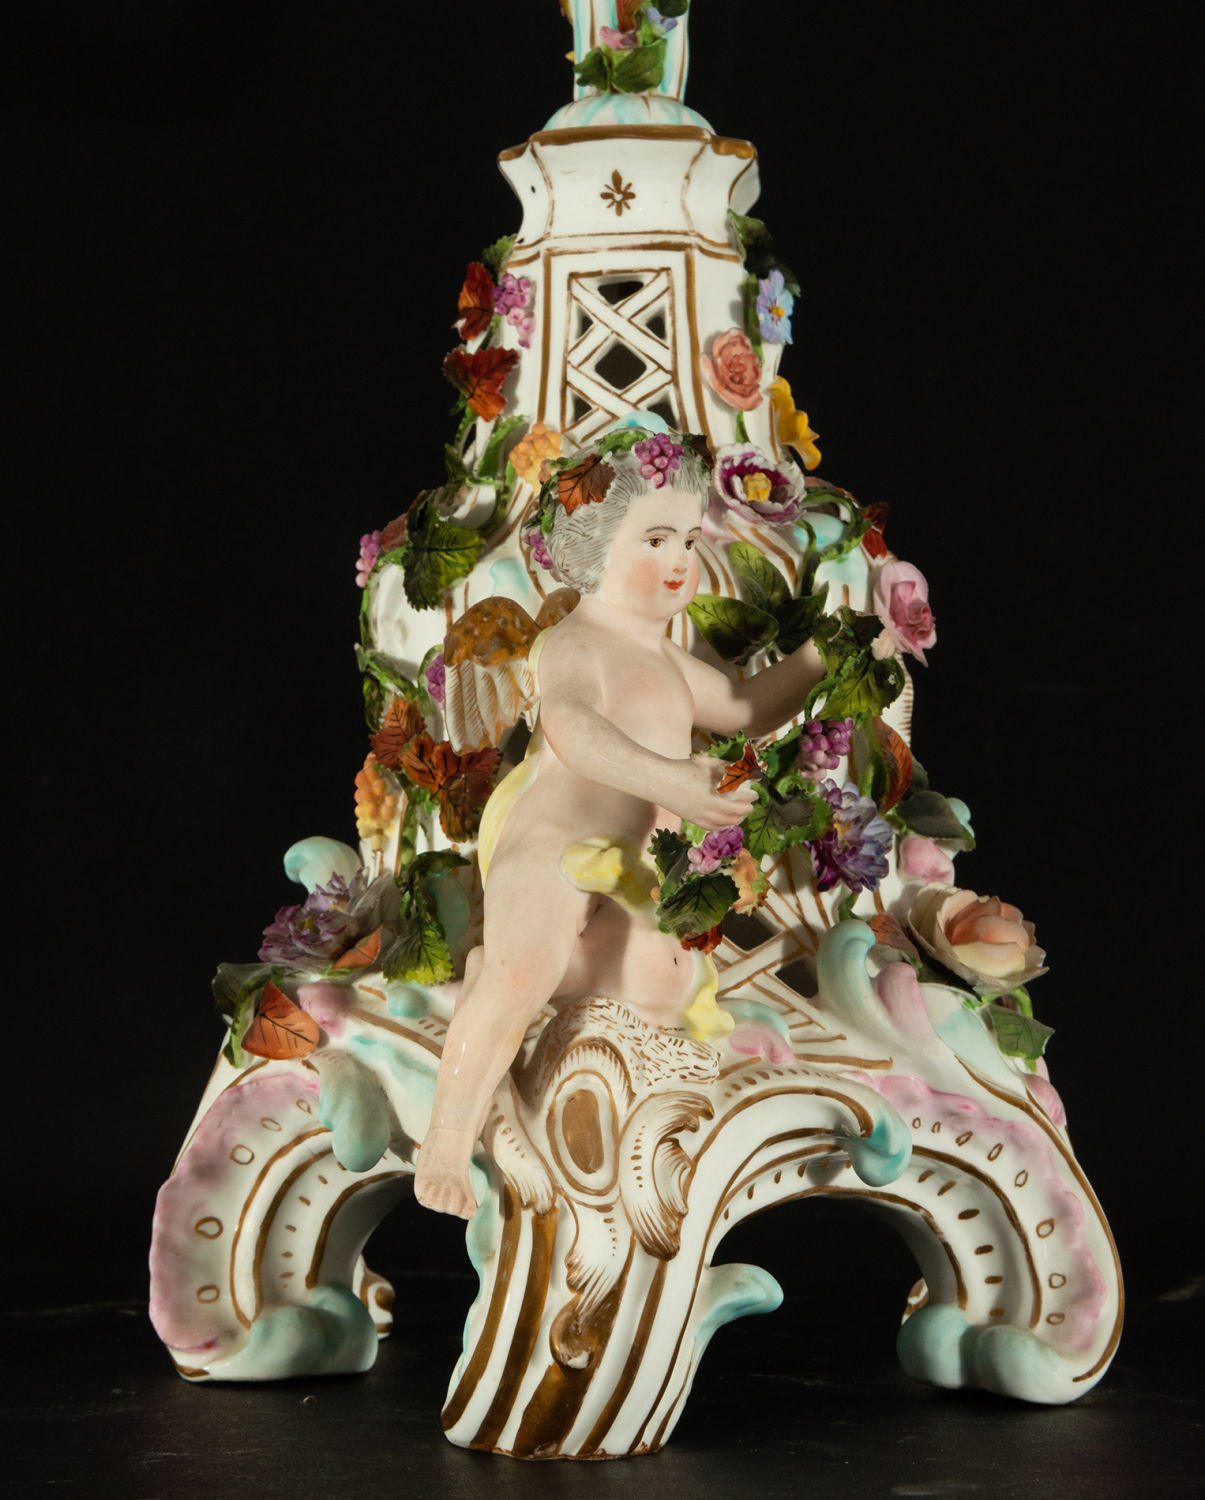 Clock trim and Candelabra in Meissen porcelain with Cherub motifs, 19th century - Image 13 of 16